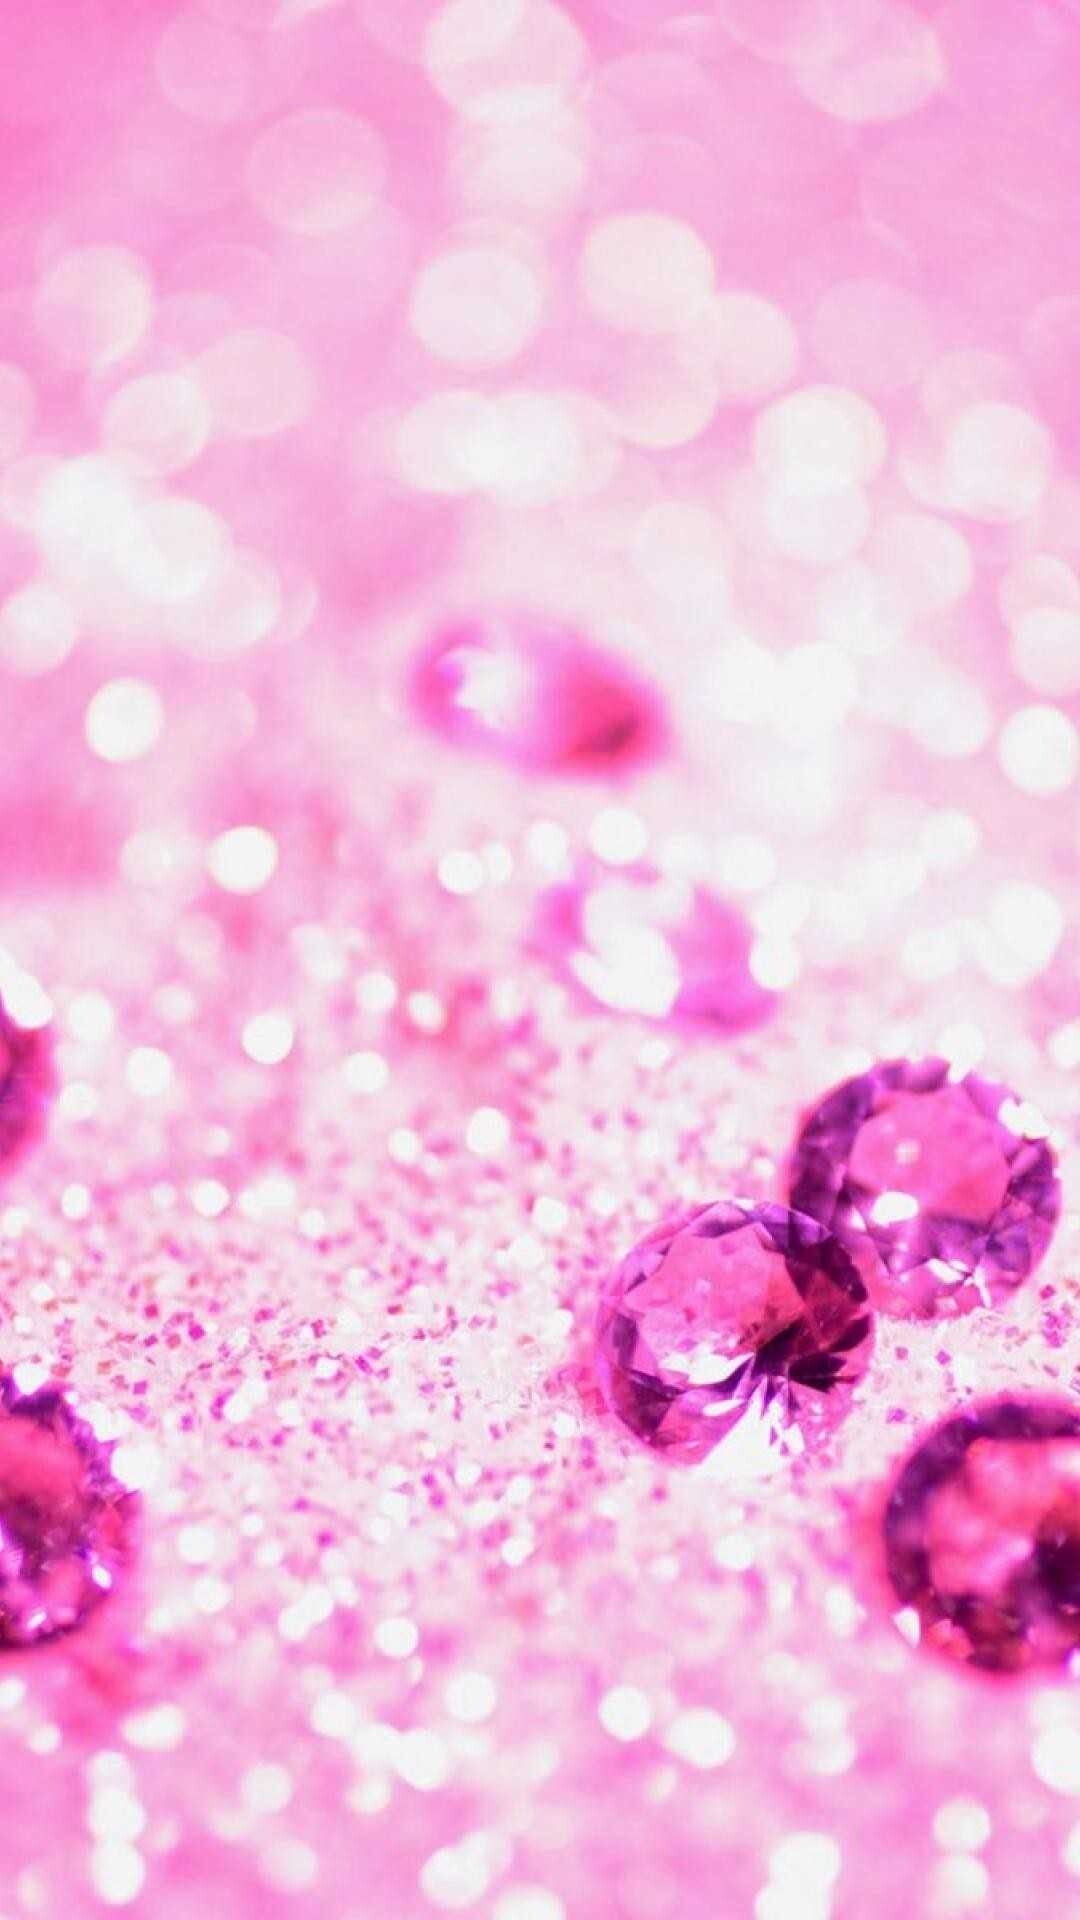 Girly: Diamonds, Sparkling, Pink glittering powder, Shimmer. 1080x1920 Full HD Wallpaper.